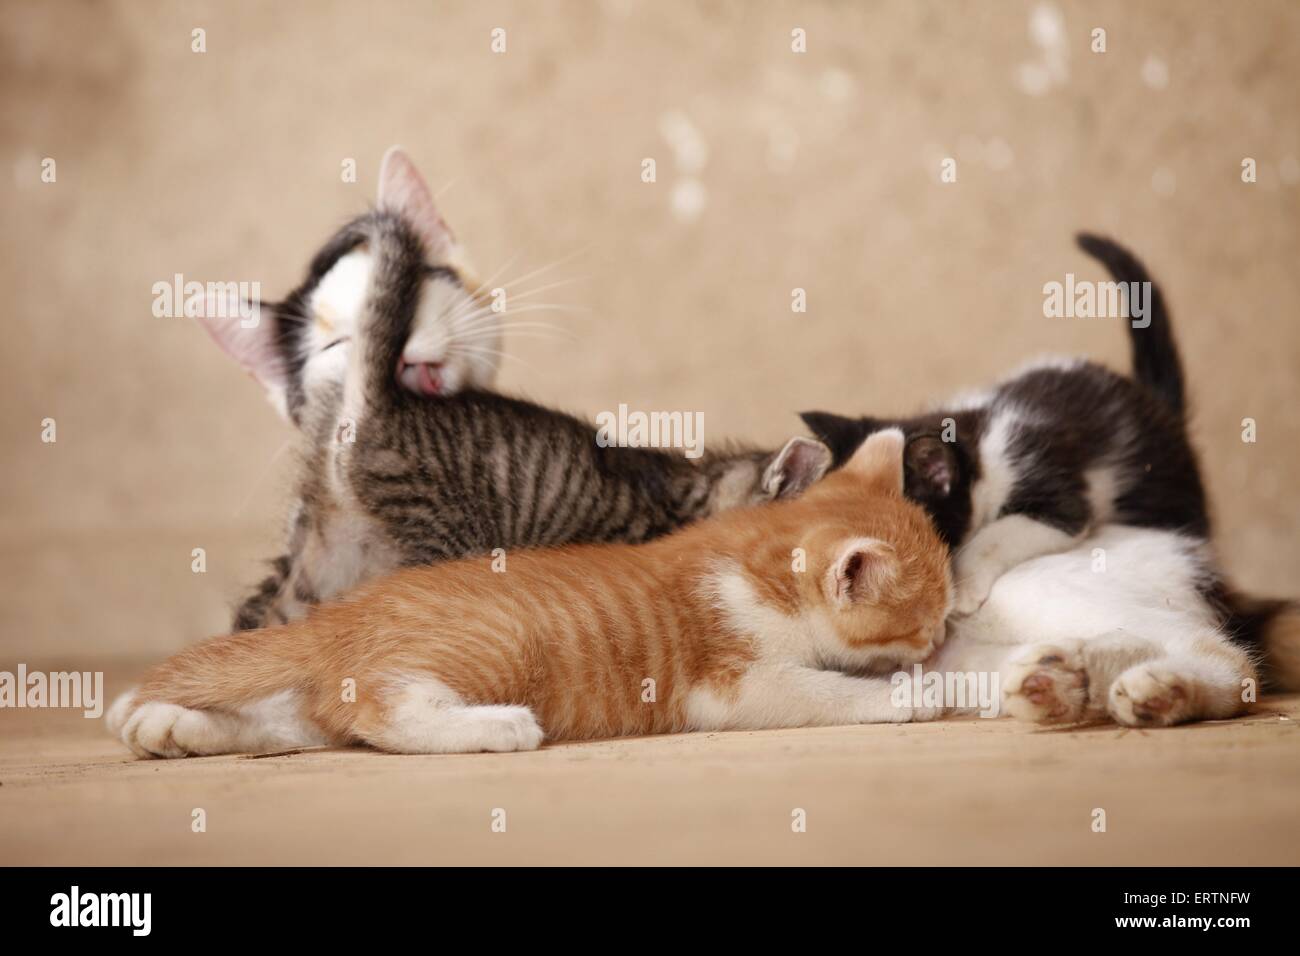 domsetic cats Stock Photo